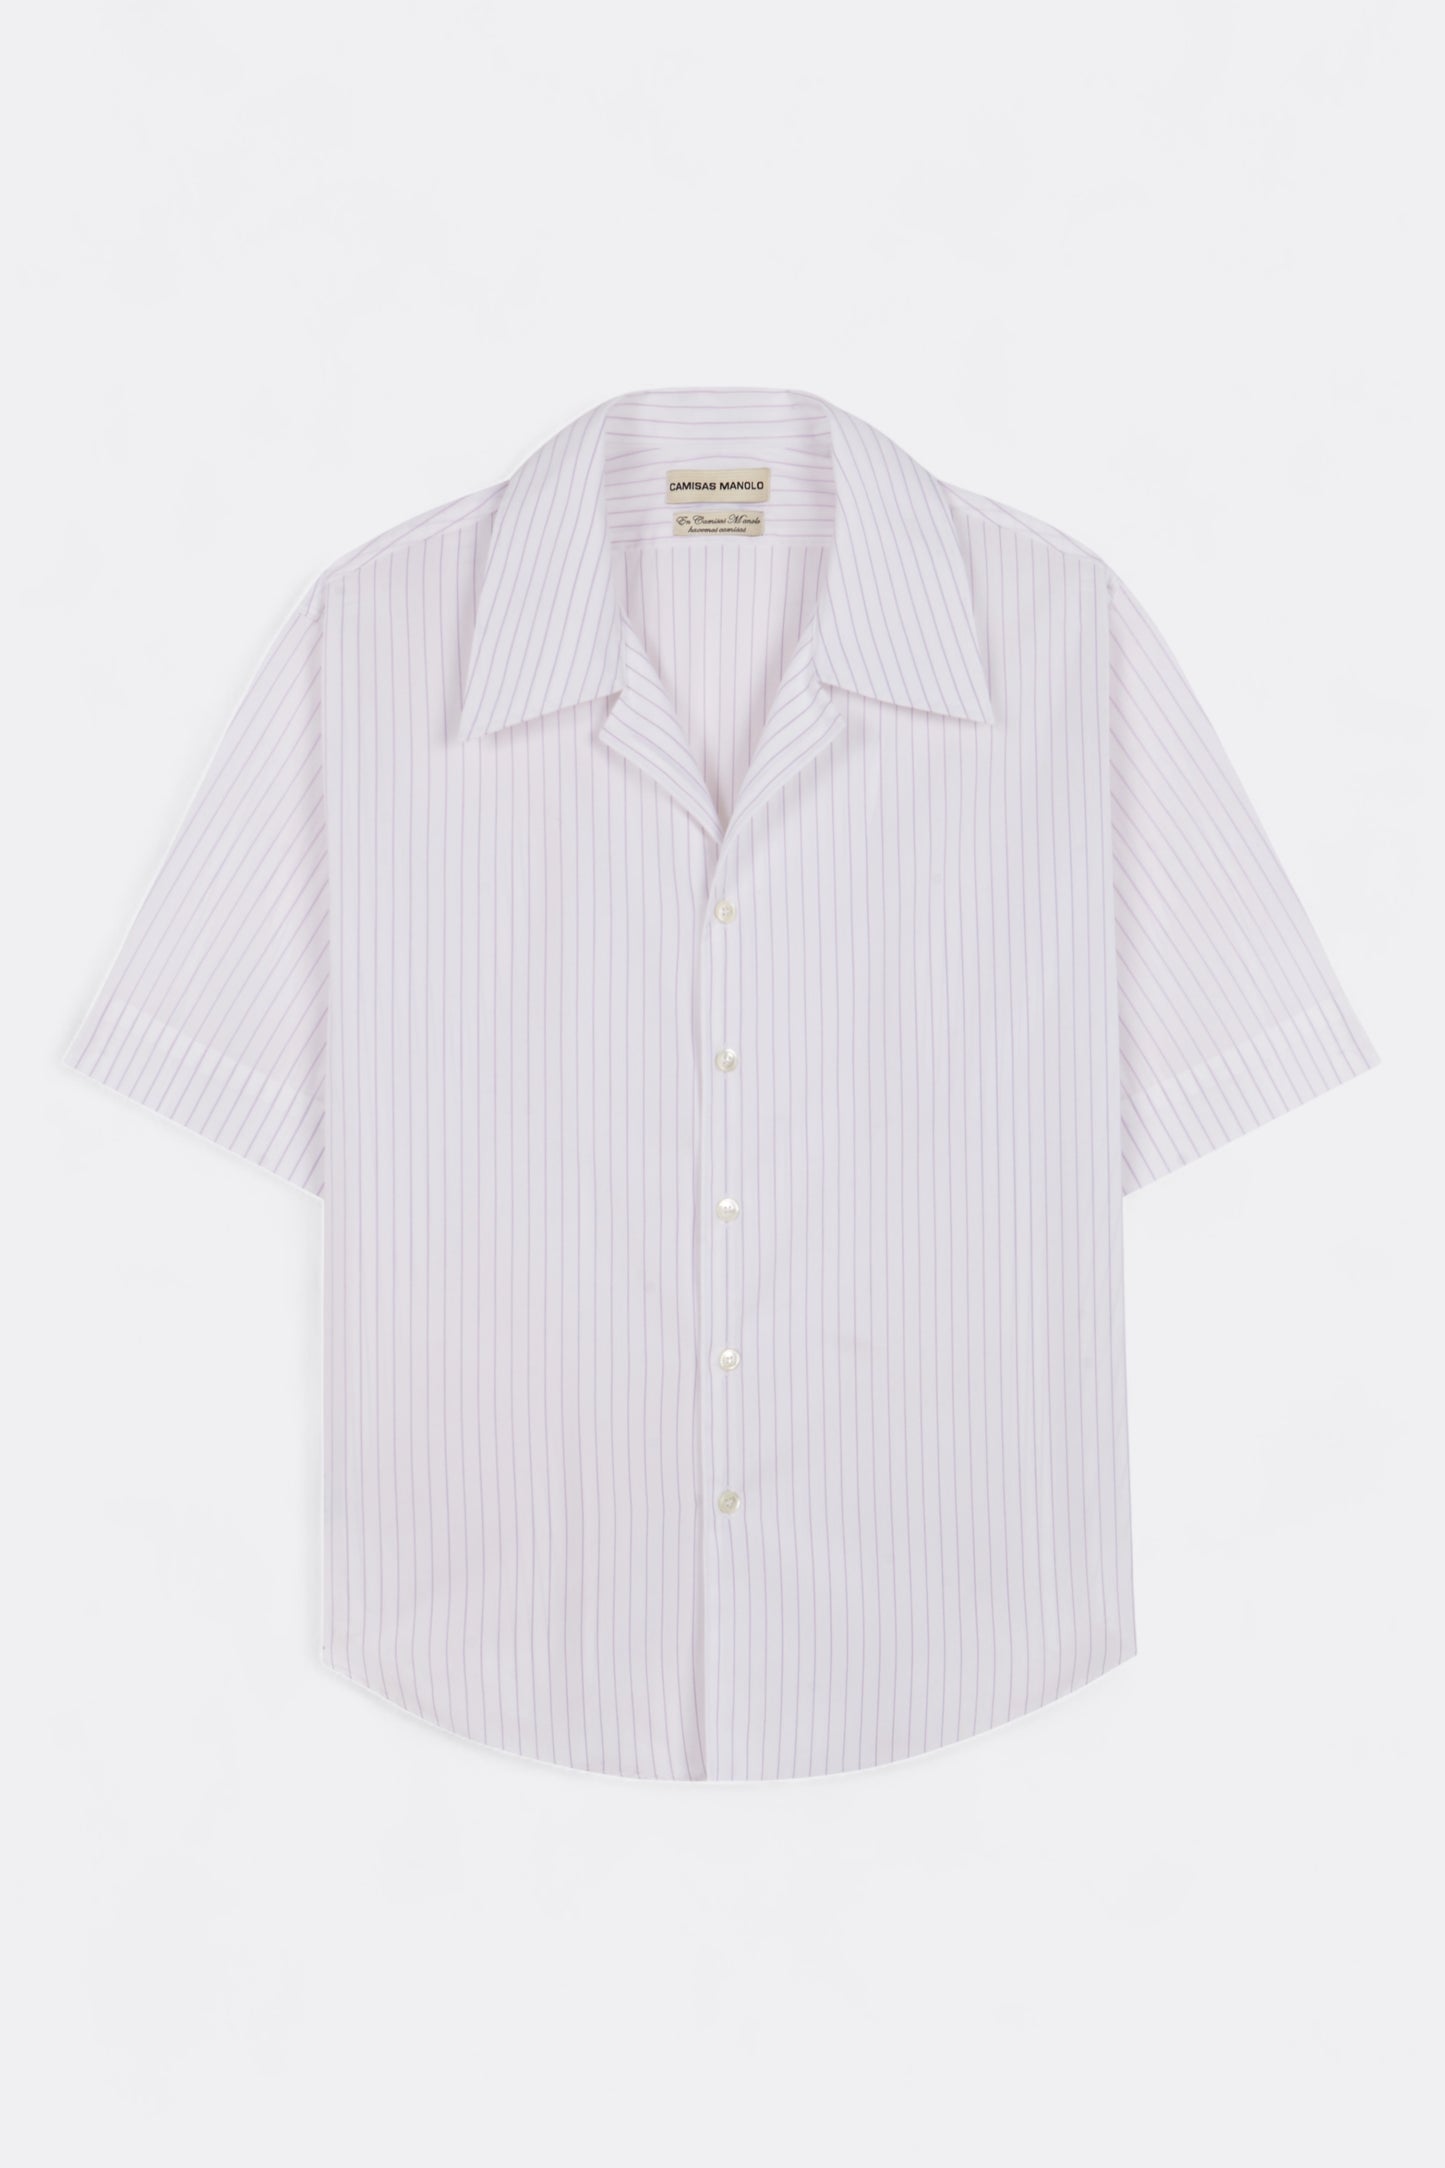 Camisas Manolo - School Shirt (Lilac Stripes White)